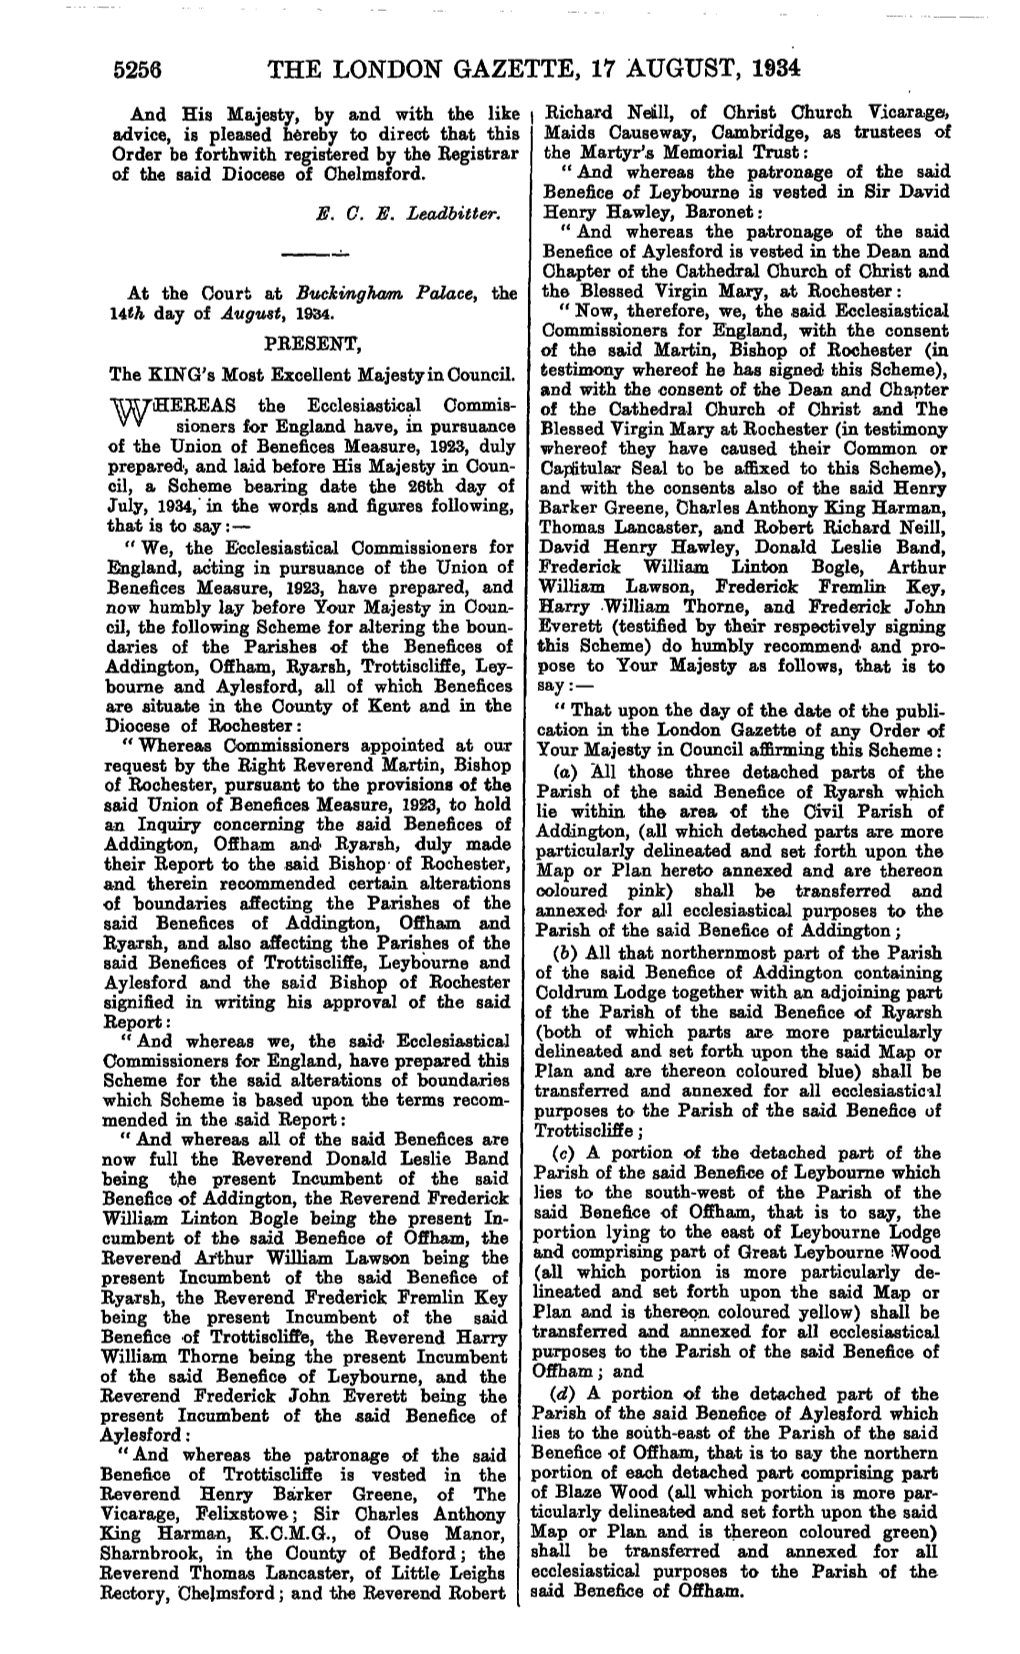 5256 the London Gazette, 17 August, 1934